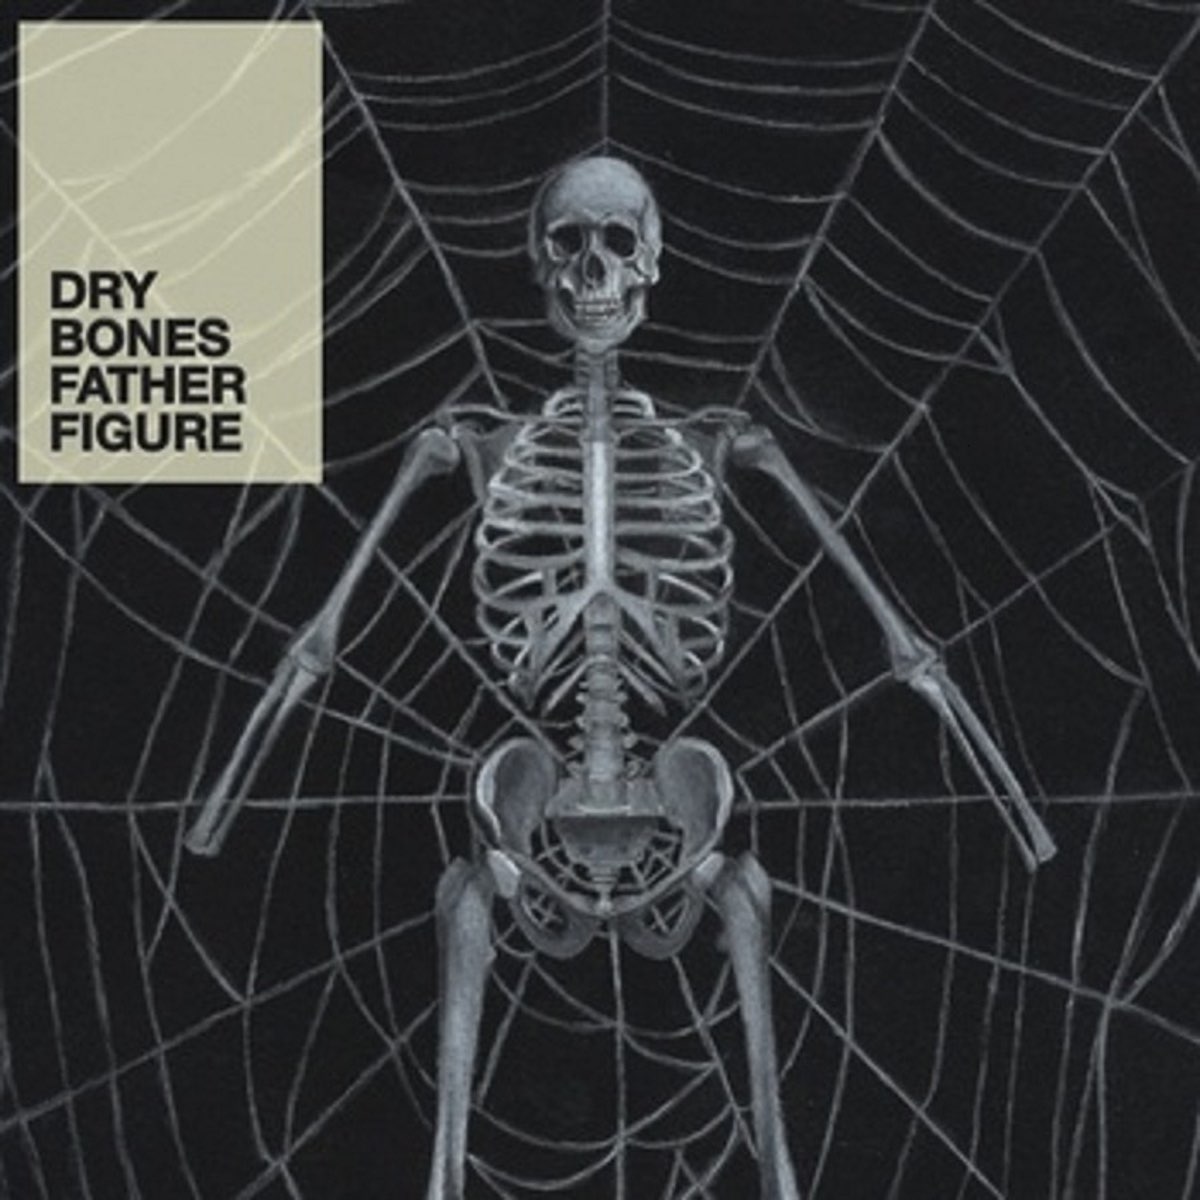 Dry bones. Bones обложки альбомов. Terry Dry Bones. Bones father.